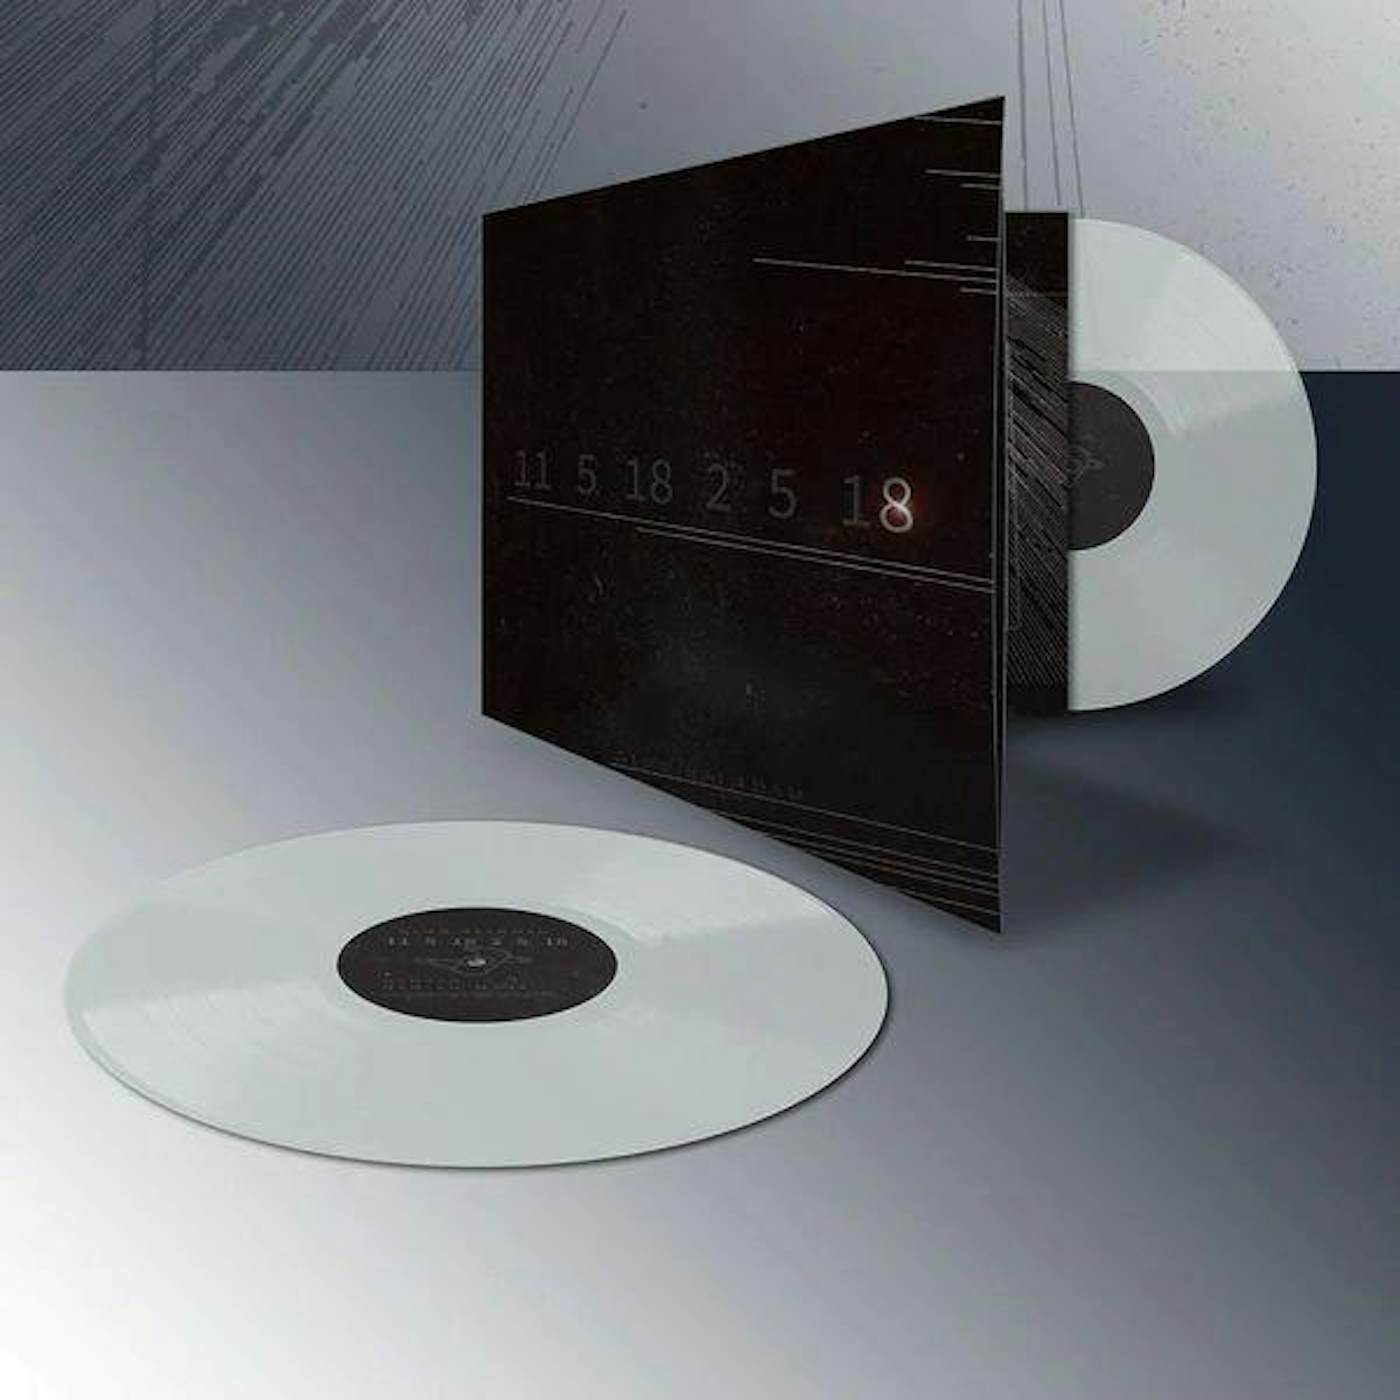 Yann Tiersen 11 5 18 2 5 18 (Clear w/ Etching) Vinyl Record